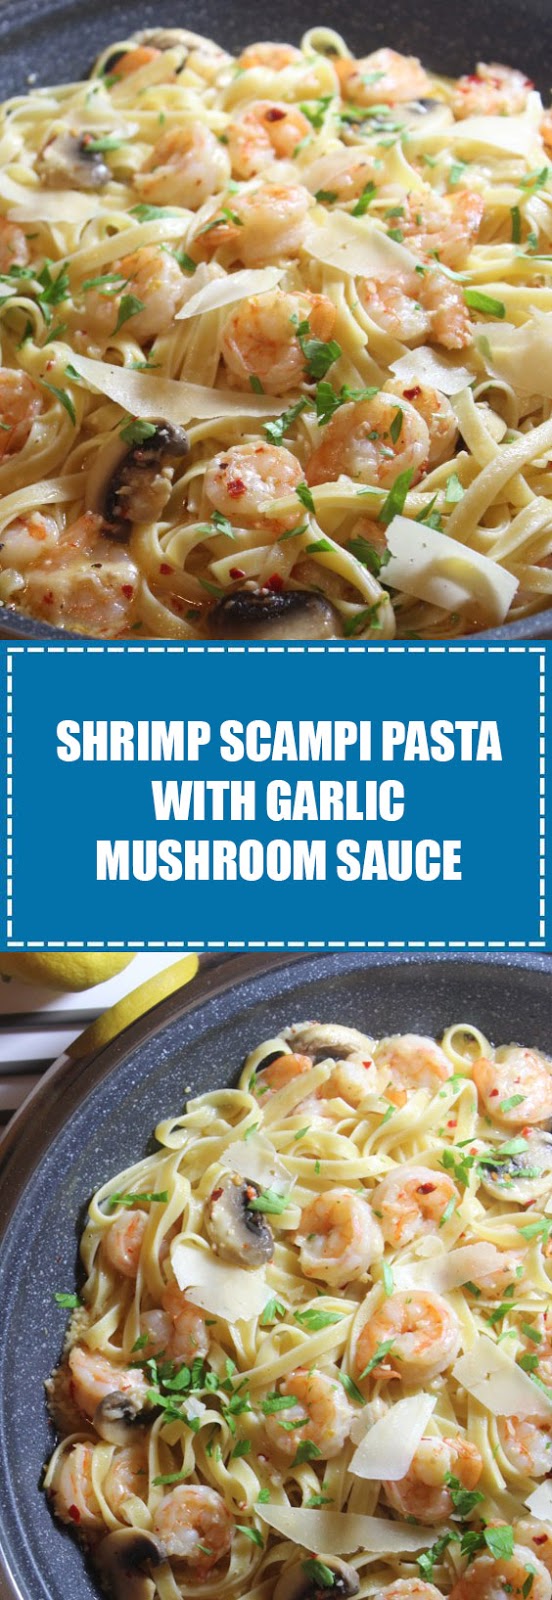 Shrimp Scampi Pasta with Garlic Mushroom Sauce